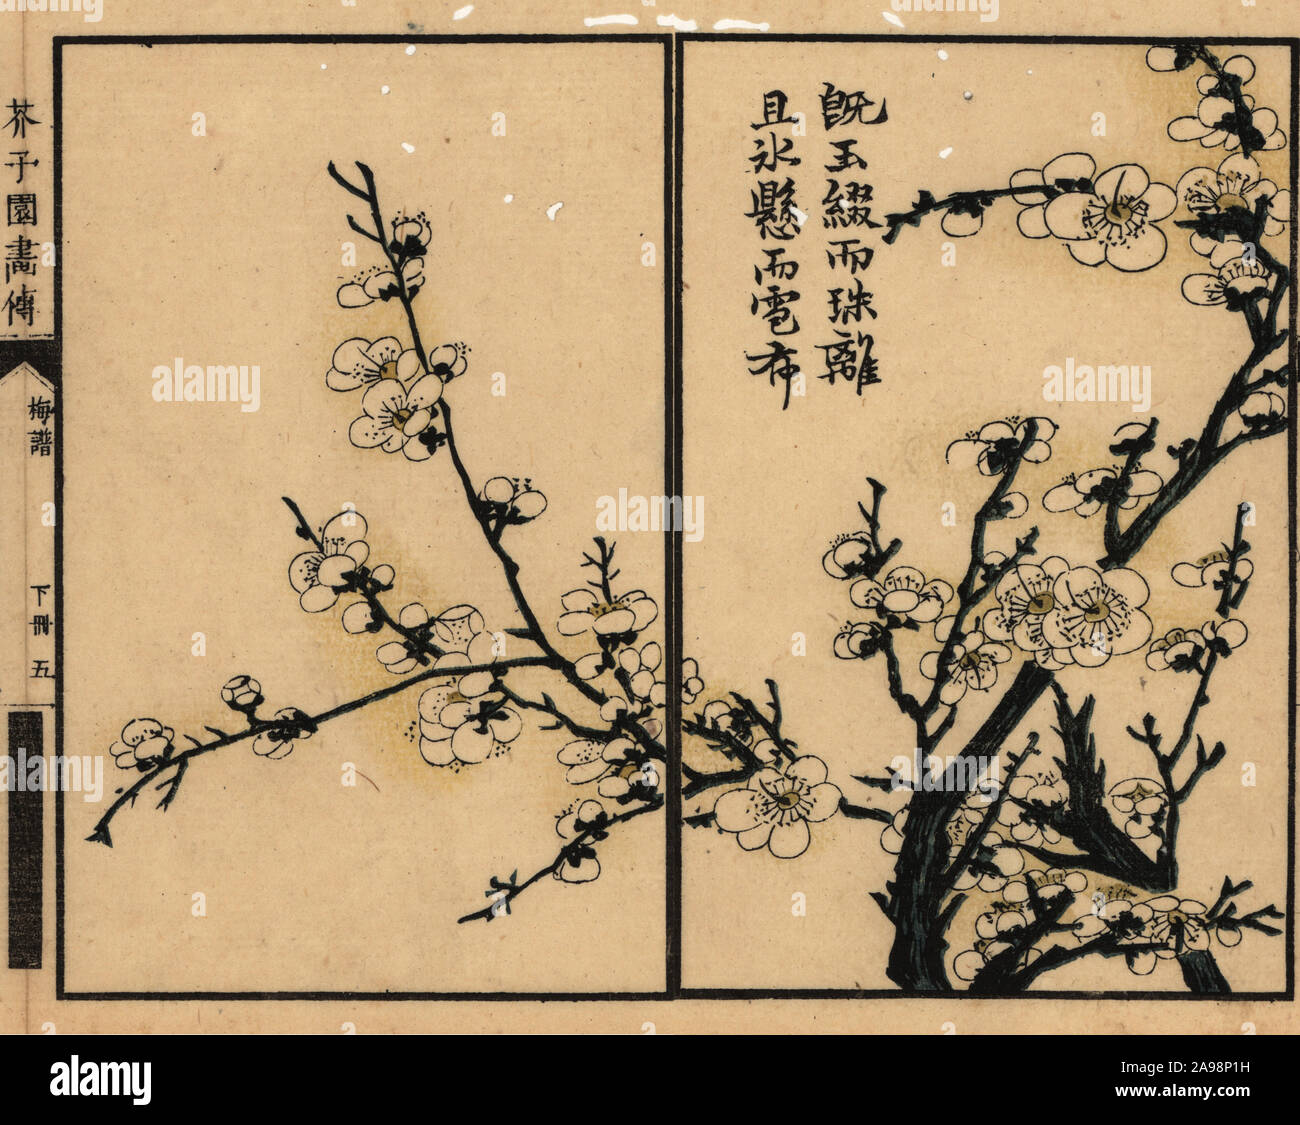 Rama del ciruelo en flor blanca con caligrafía. Xilografía Color de mokuhanga Kaishien Gaden, edición japonesa de Wang Gai's Jieziyuan Huazhaun o manual de la Semilla de Mostaza Jardín, segunda colección, Ichimura Bunko, Tokio, 1812. Foto de stock